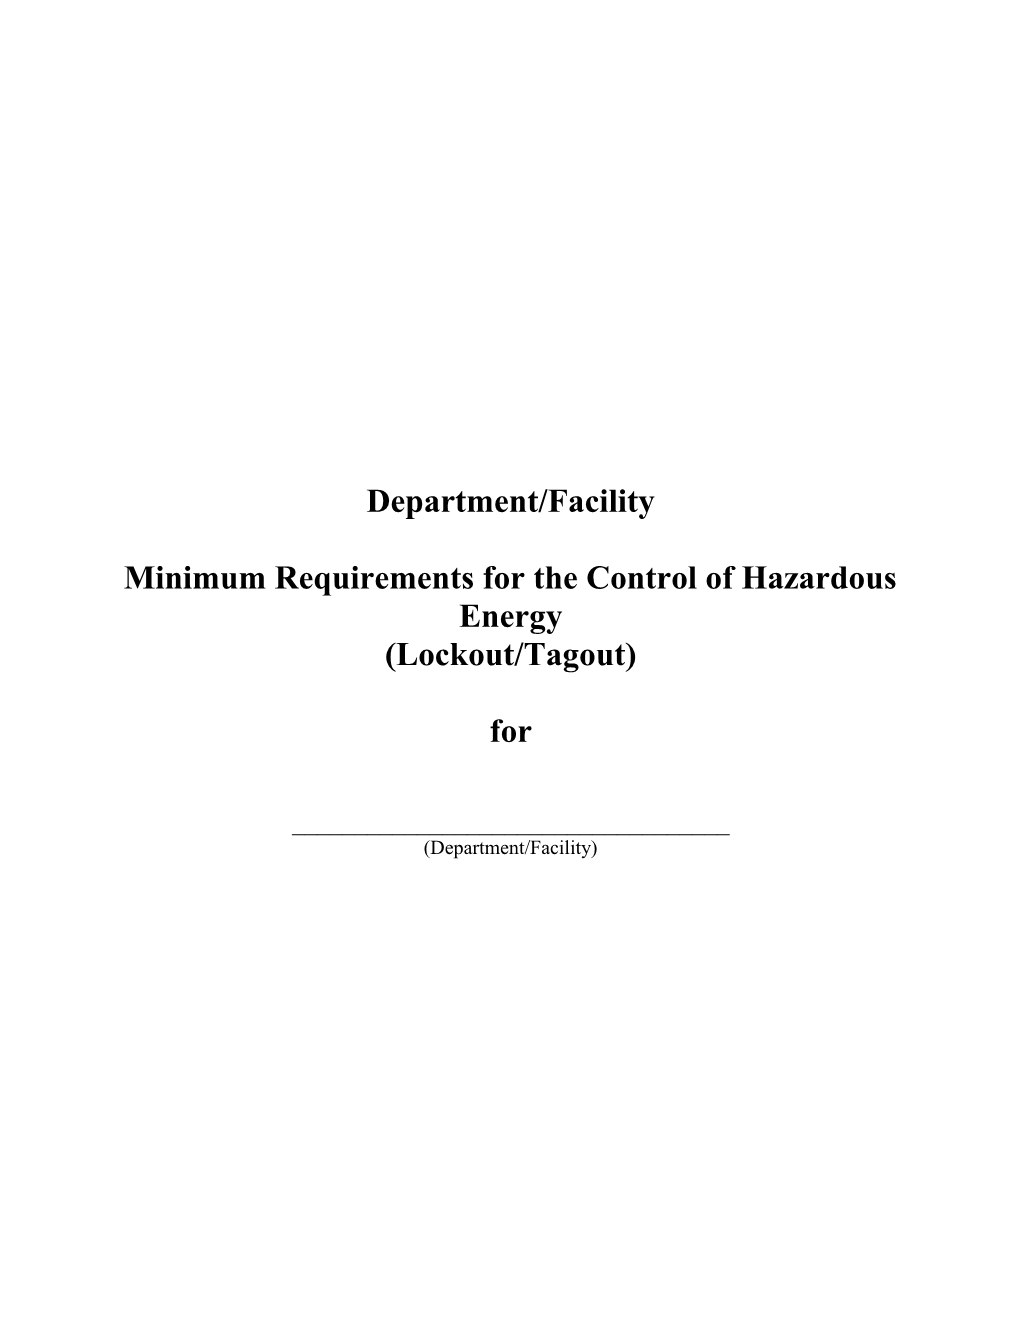 Minimum Requirements for the Control of Hazardous Energy